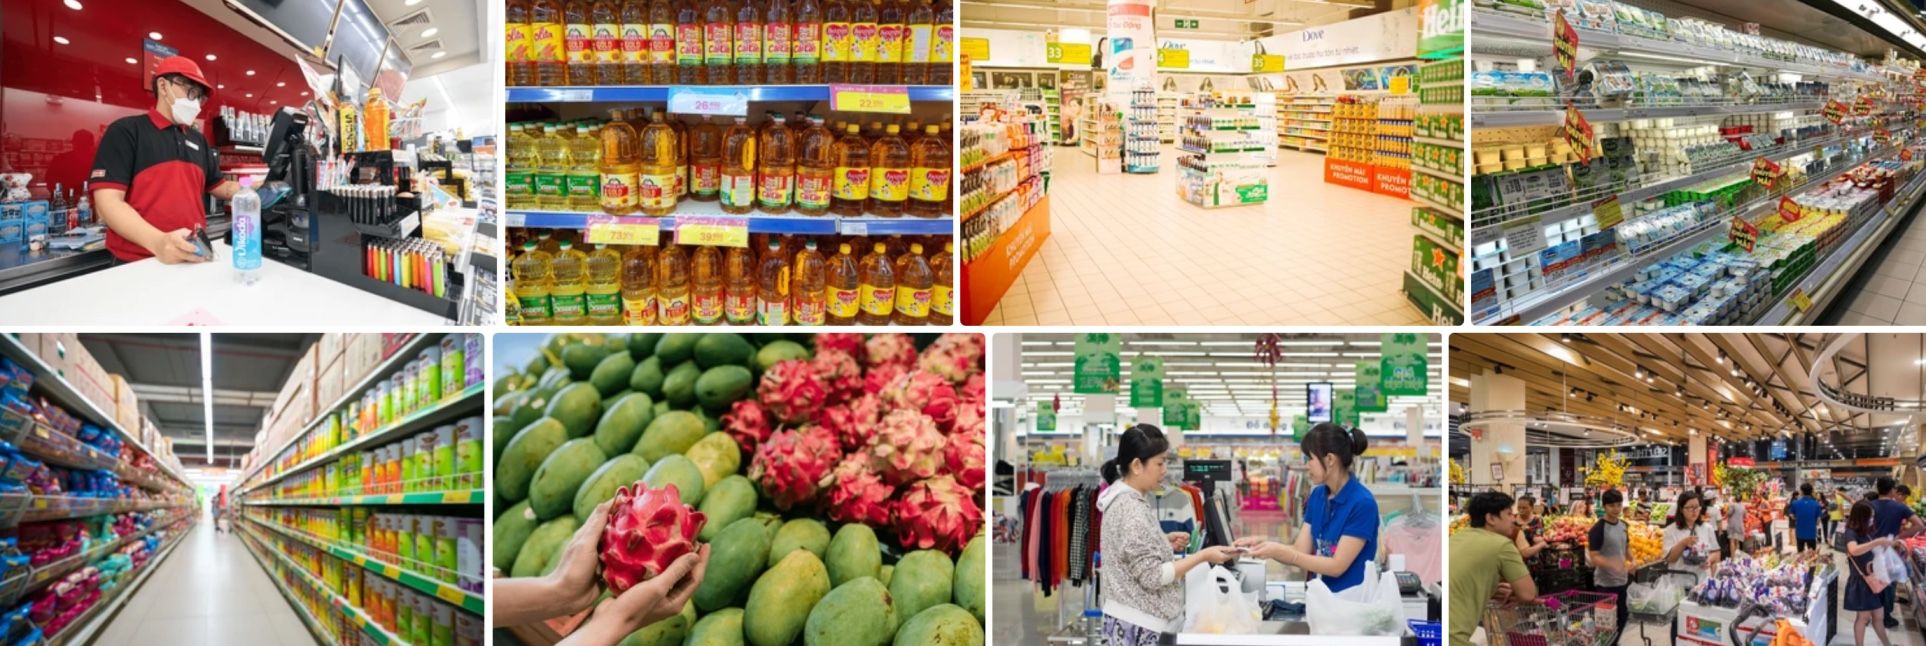 supermarkets in vietnam - pictures in vietnam supermarket - photos inside vietnam supermarket